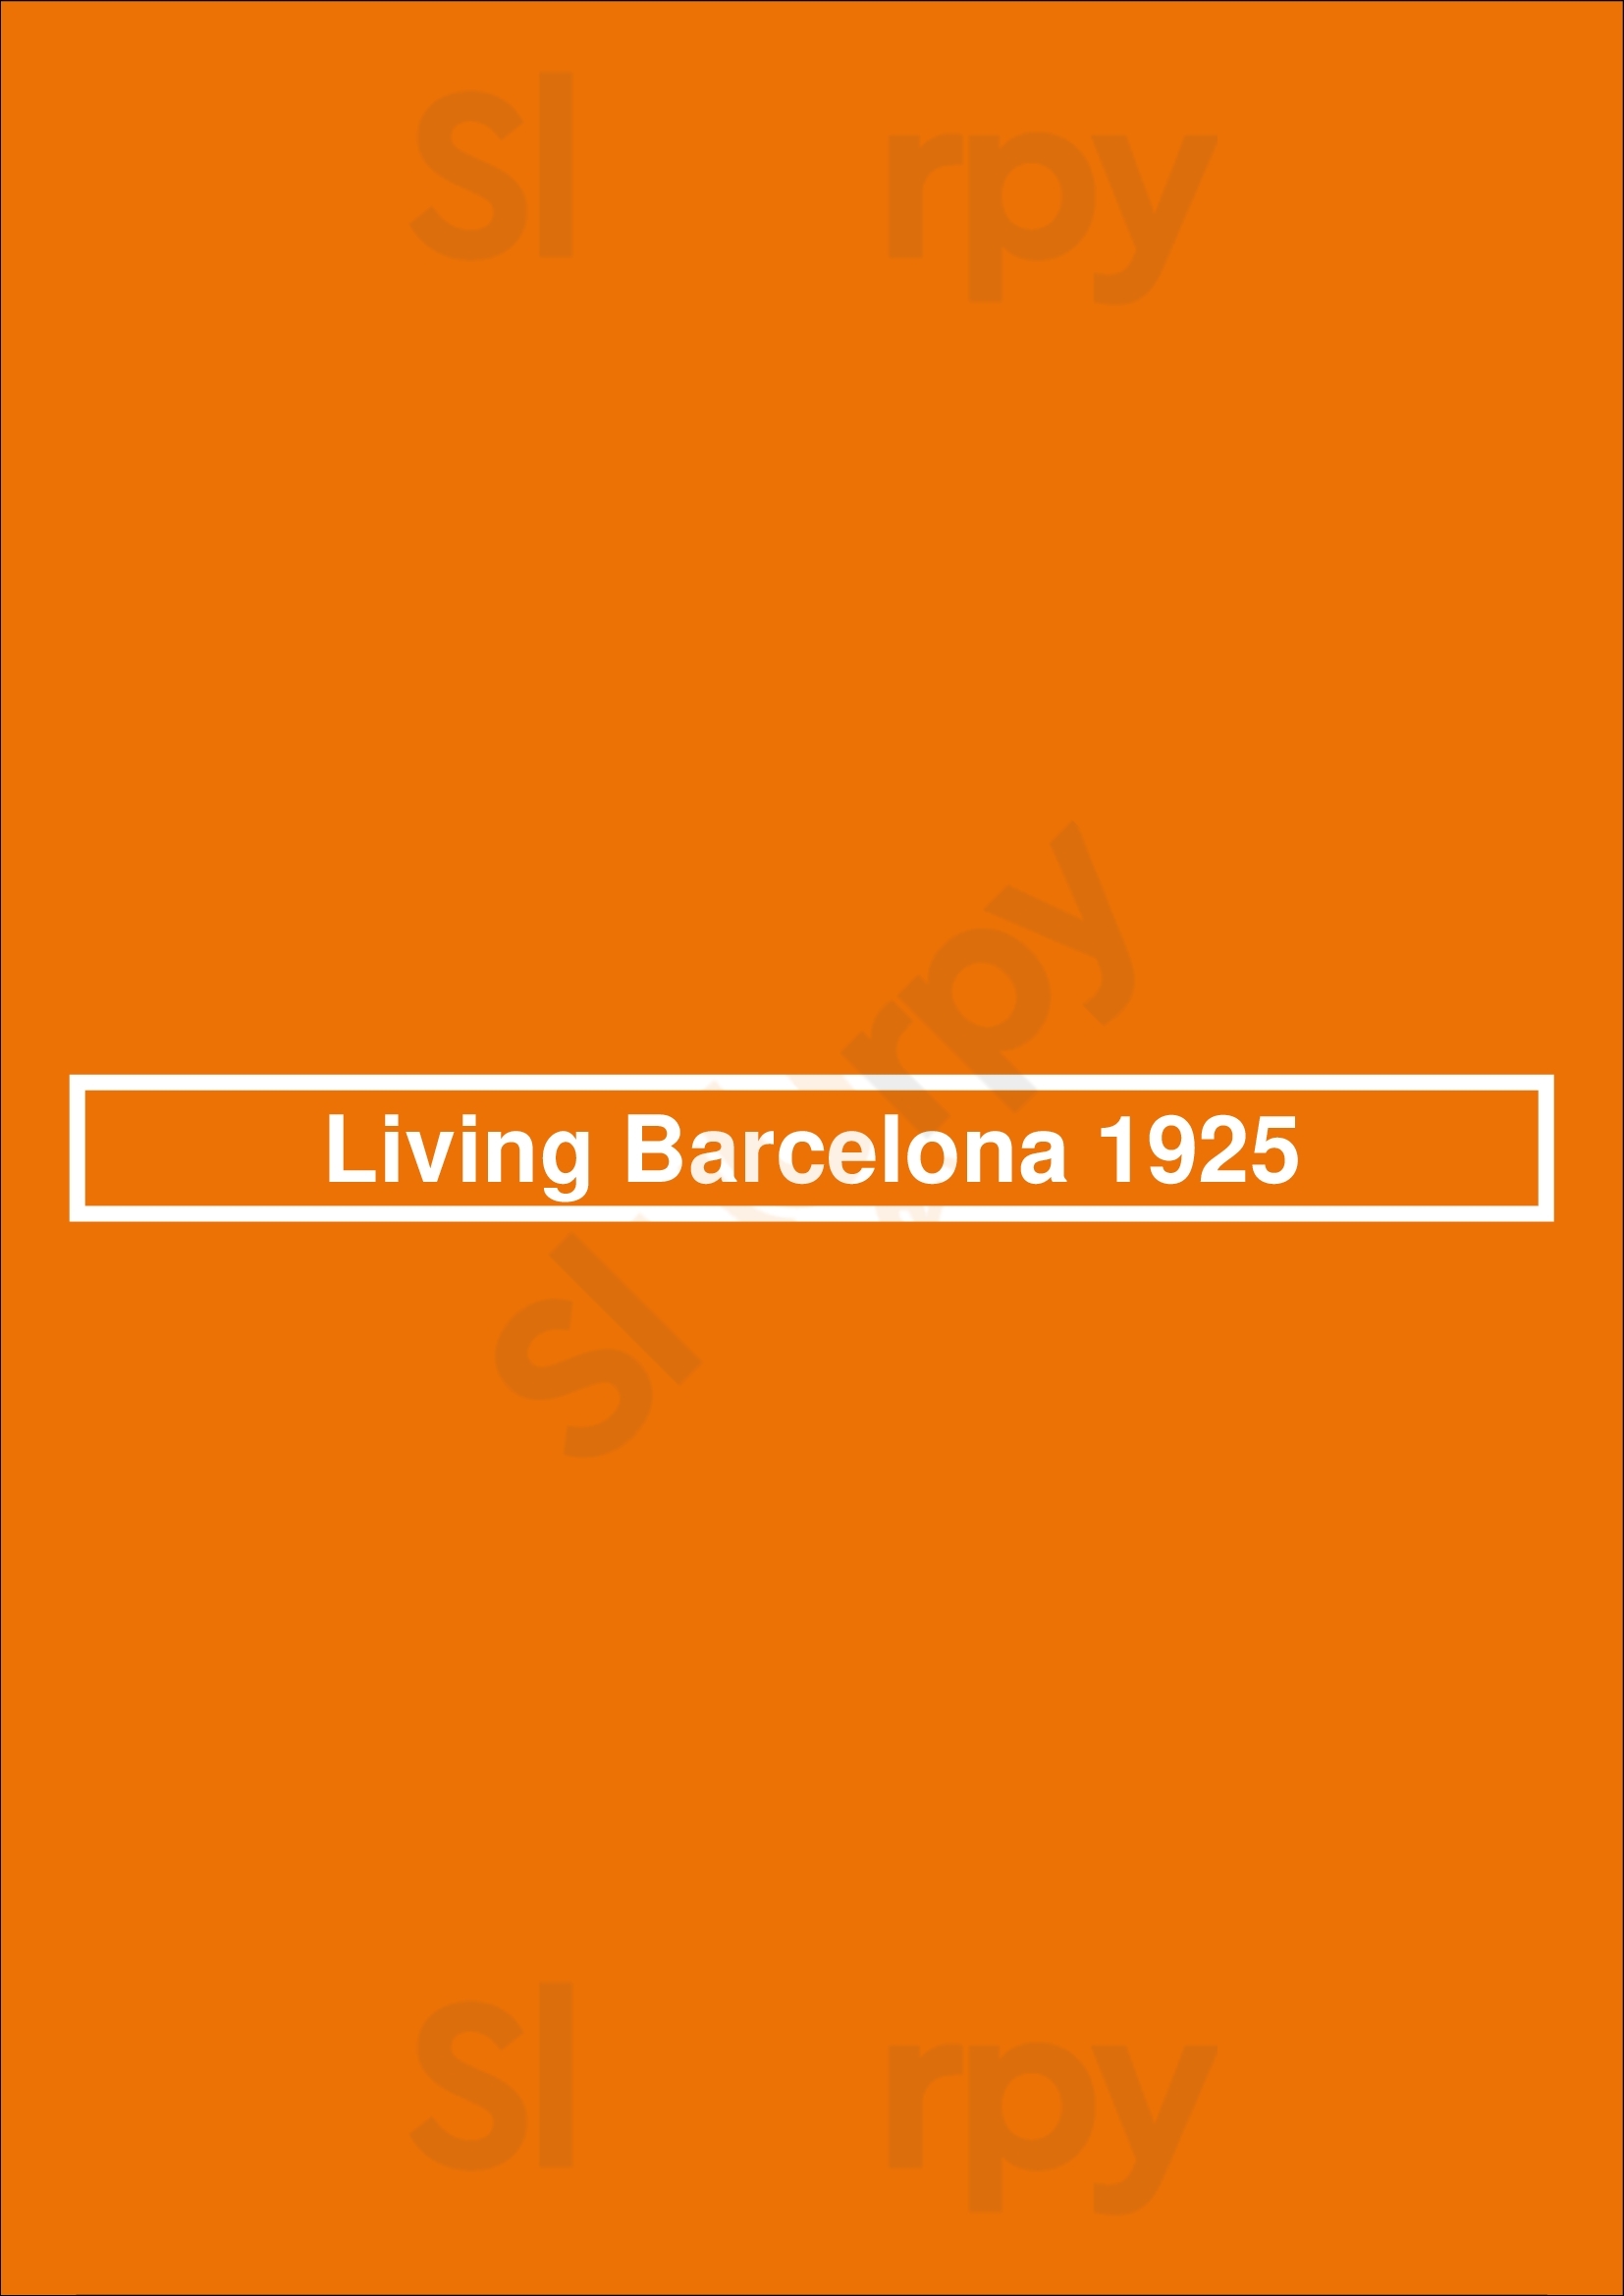 Living Barcelona 1925 Barcelona Menu - 1